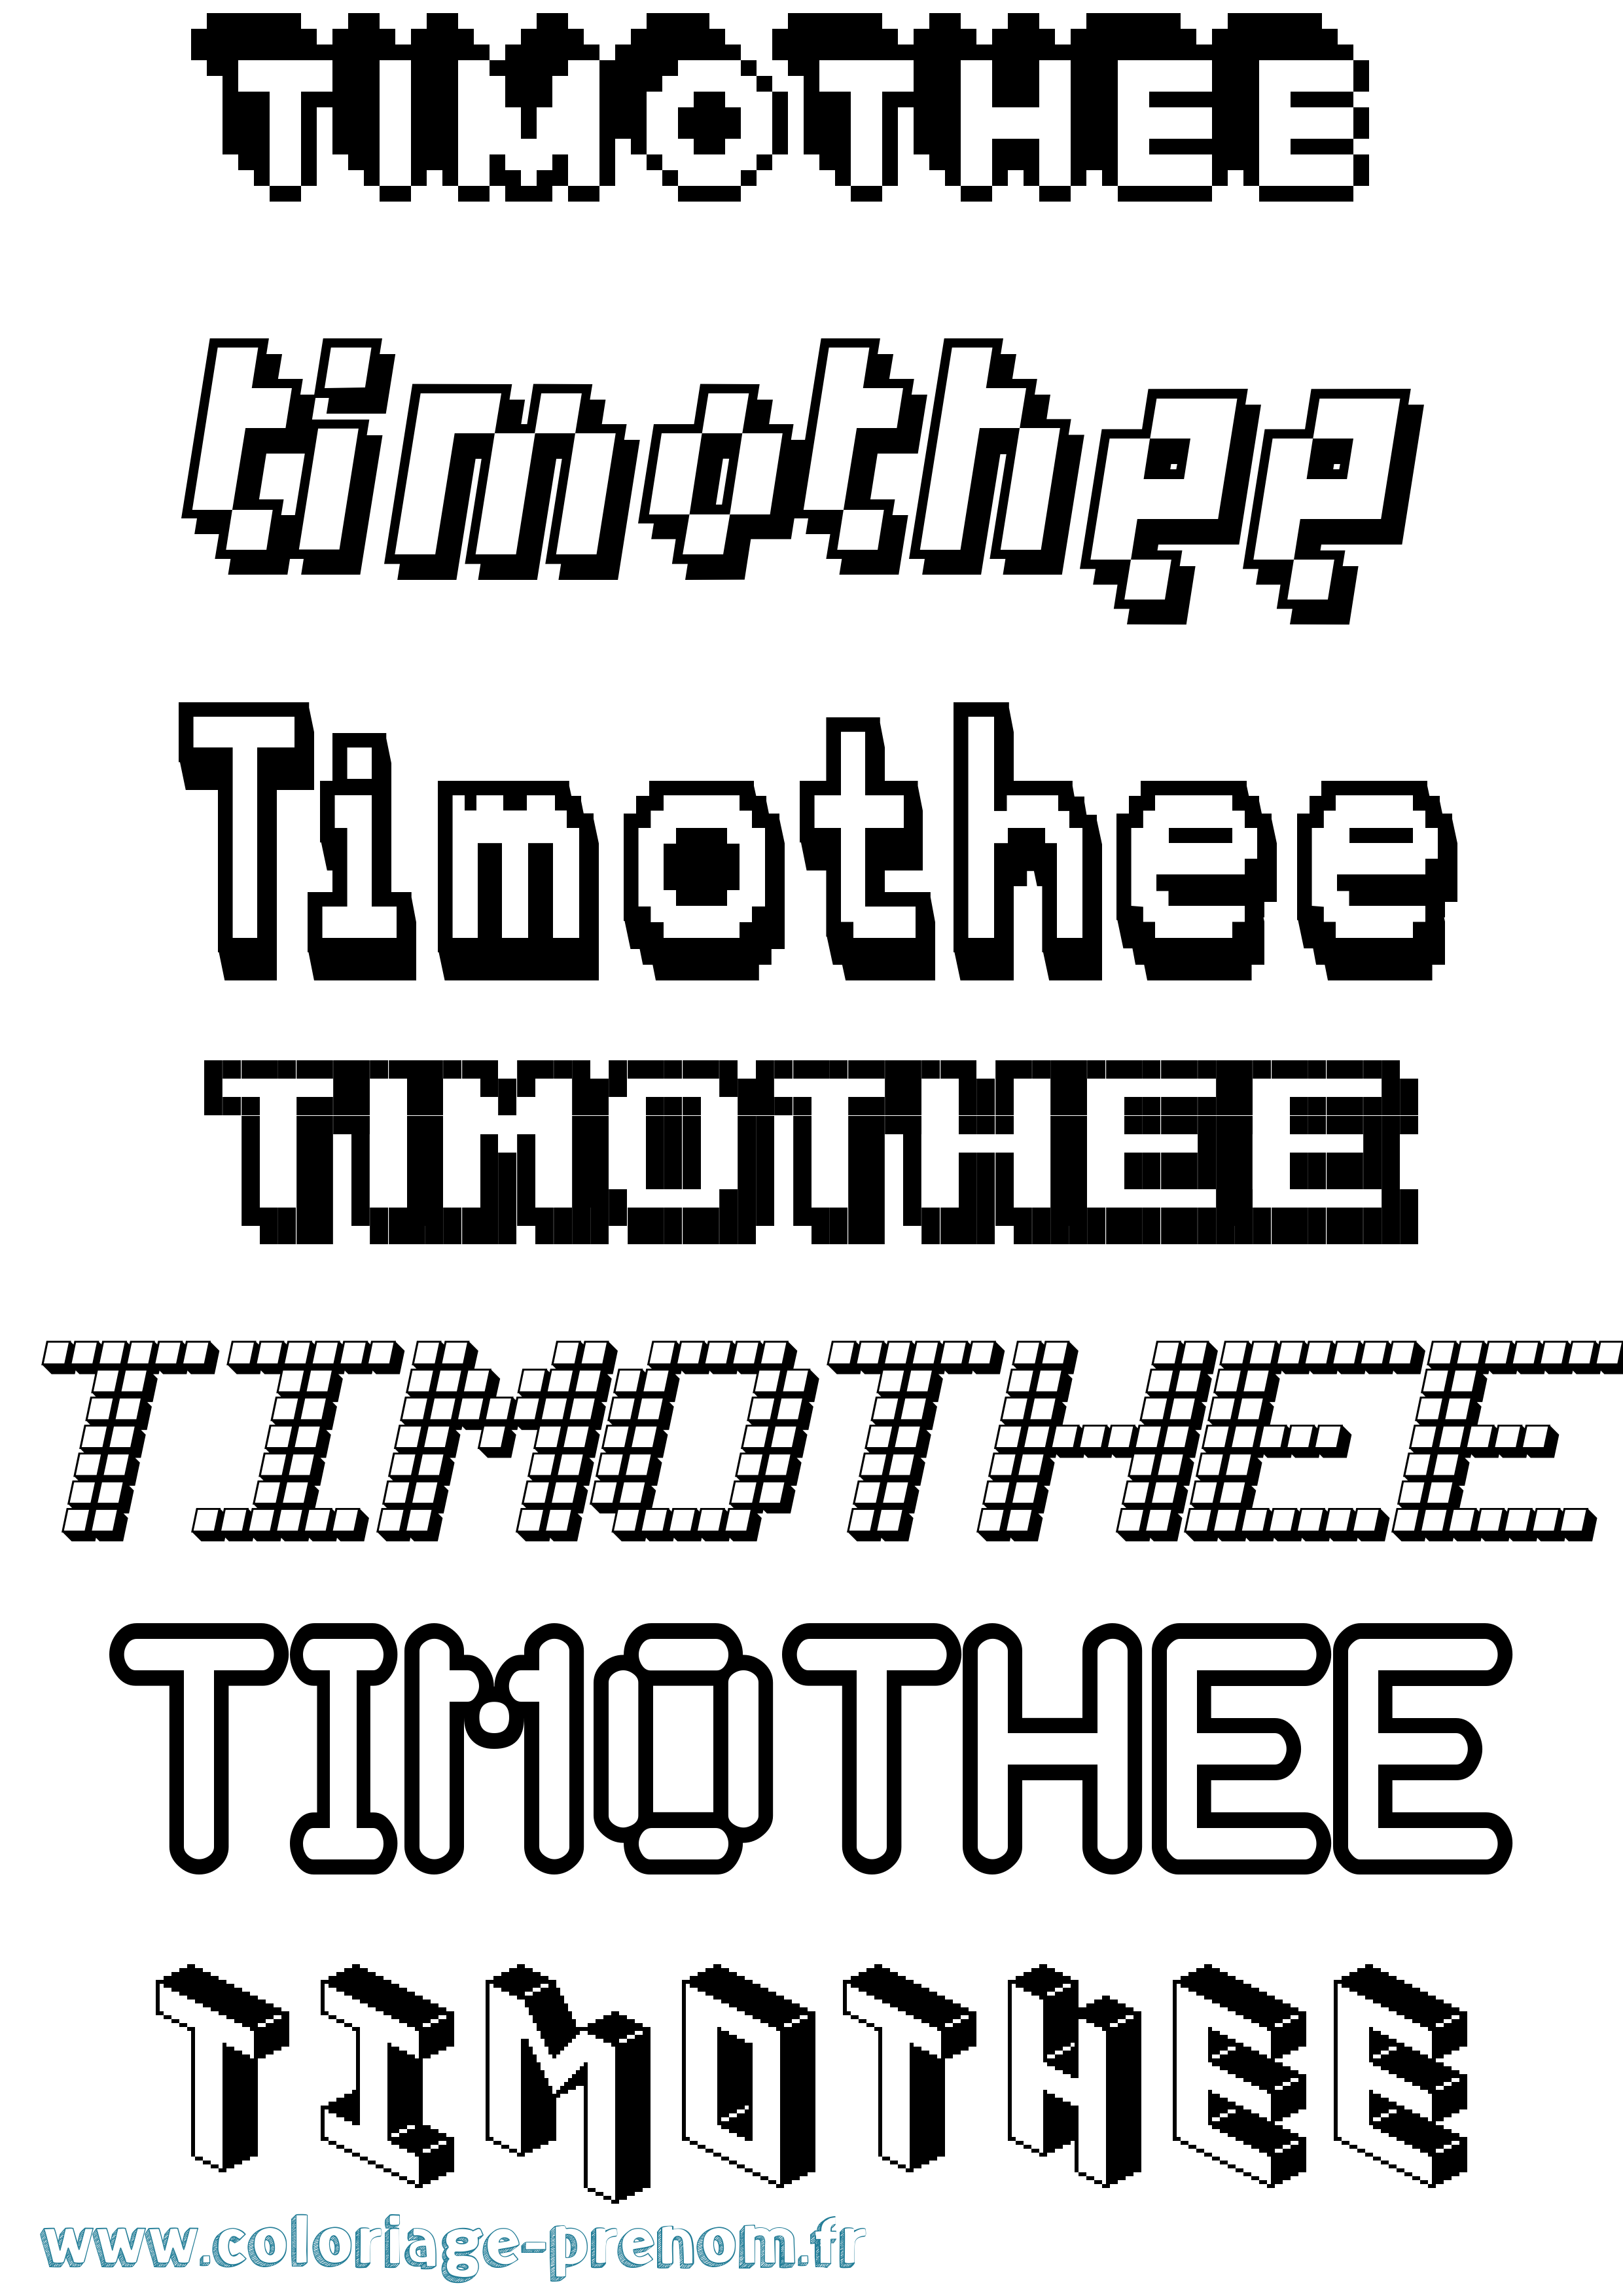 Coloriage prénom Timothee Pixel